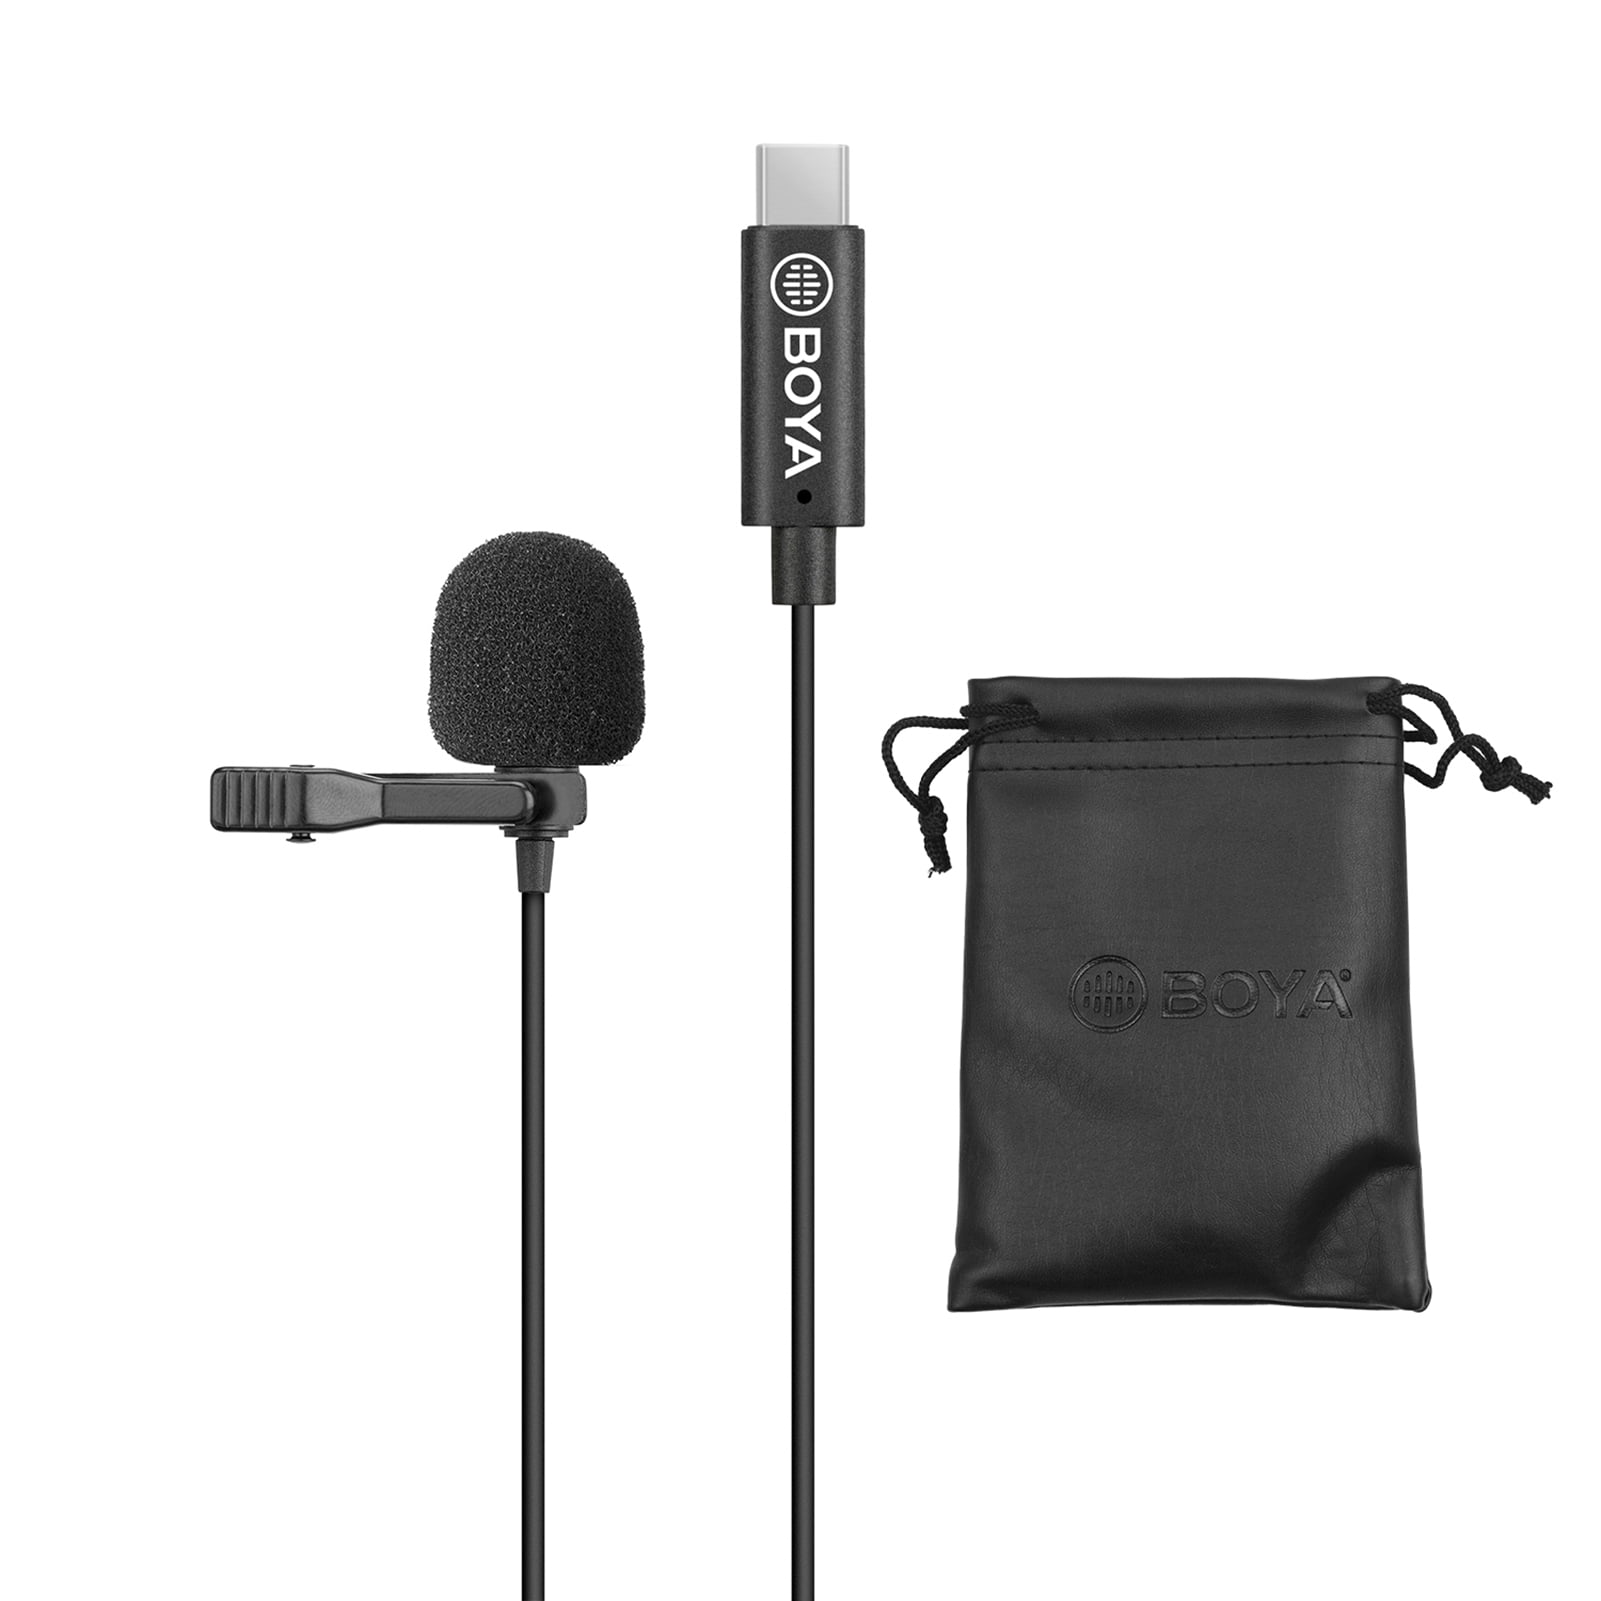 Foam Windscreen & Lapel Clips 6 packs BOYA Microphone Replacement Kit for Lapel Lavalier Microphone Lav Microphone Accessories 